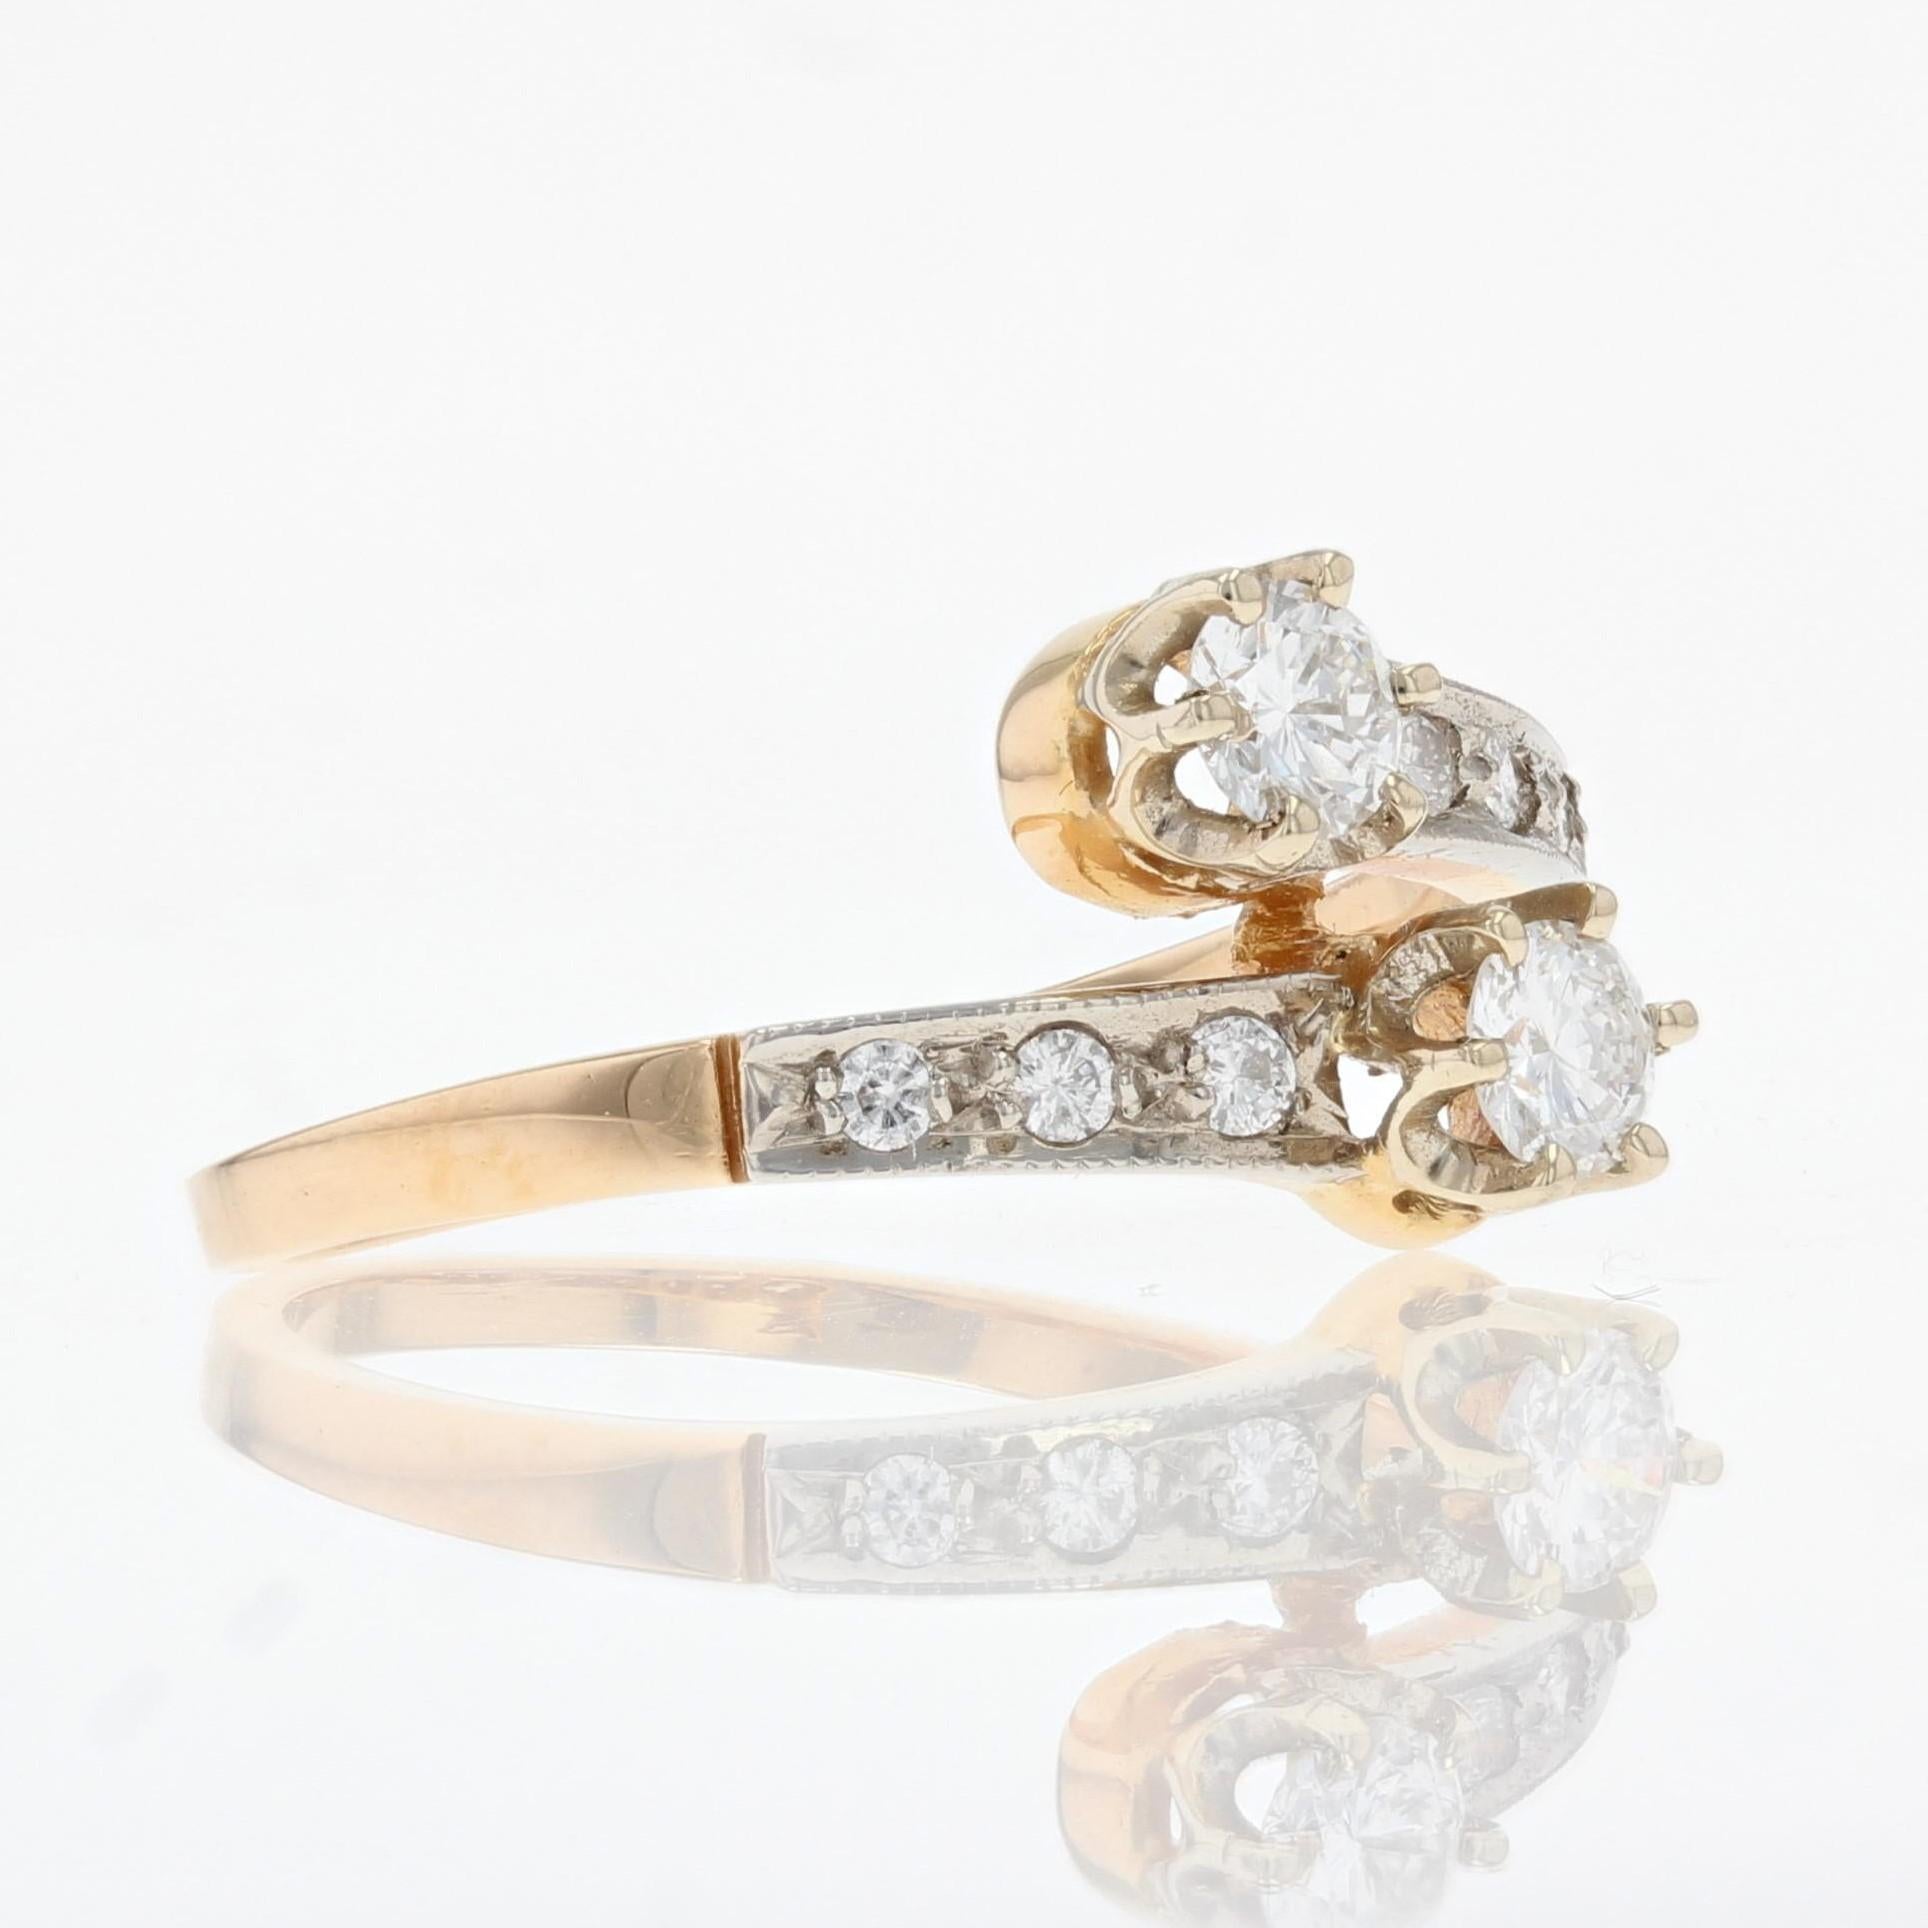 platinium wedding rings